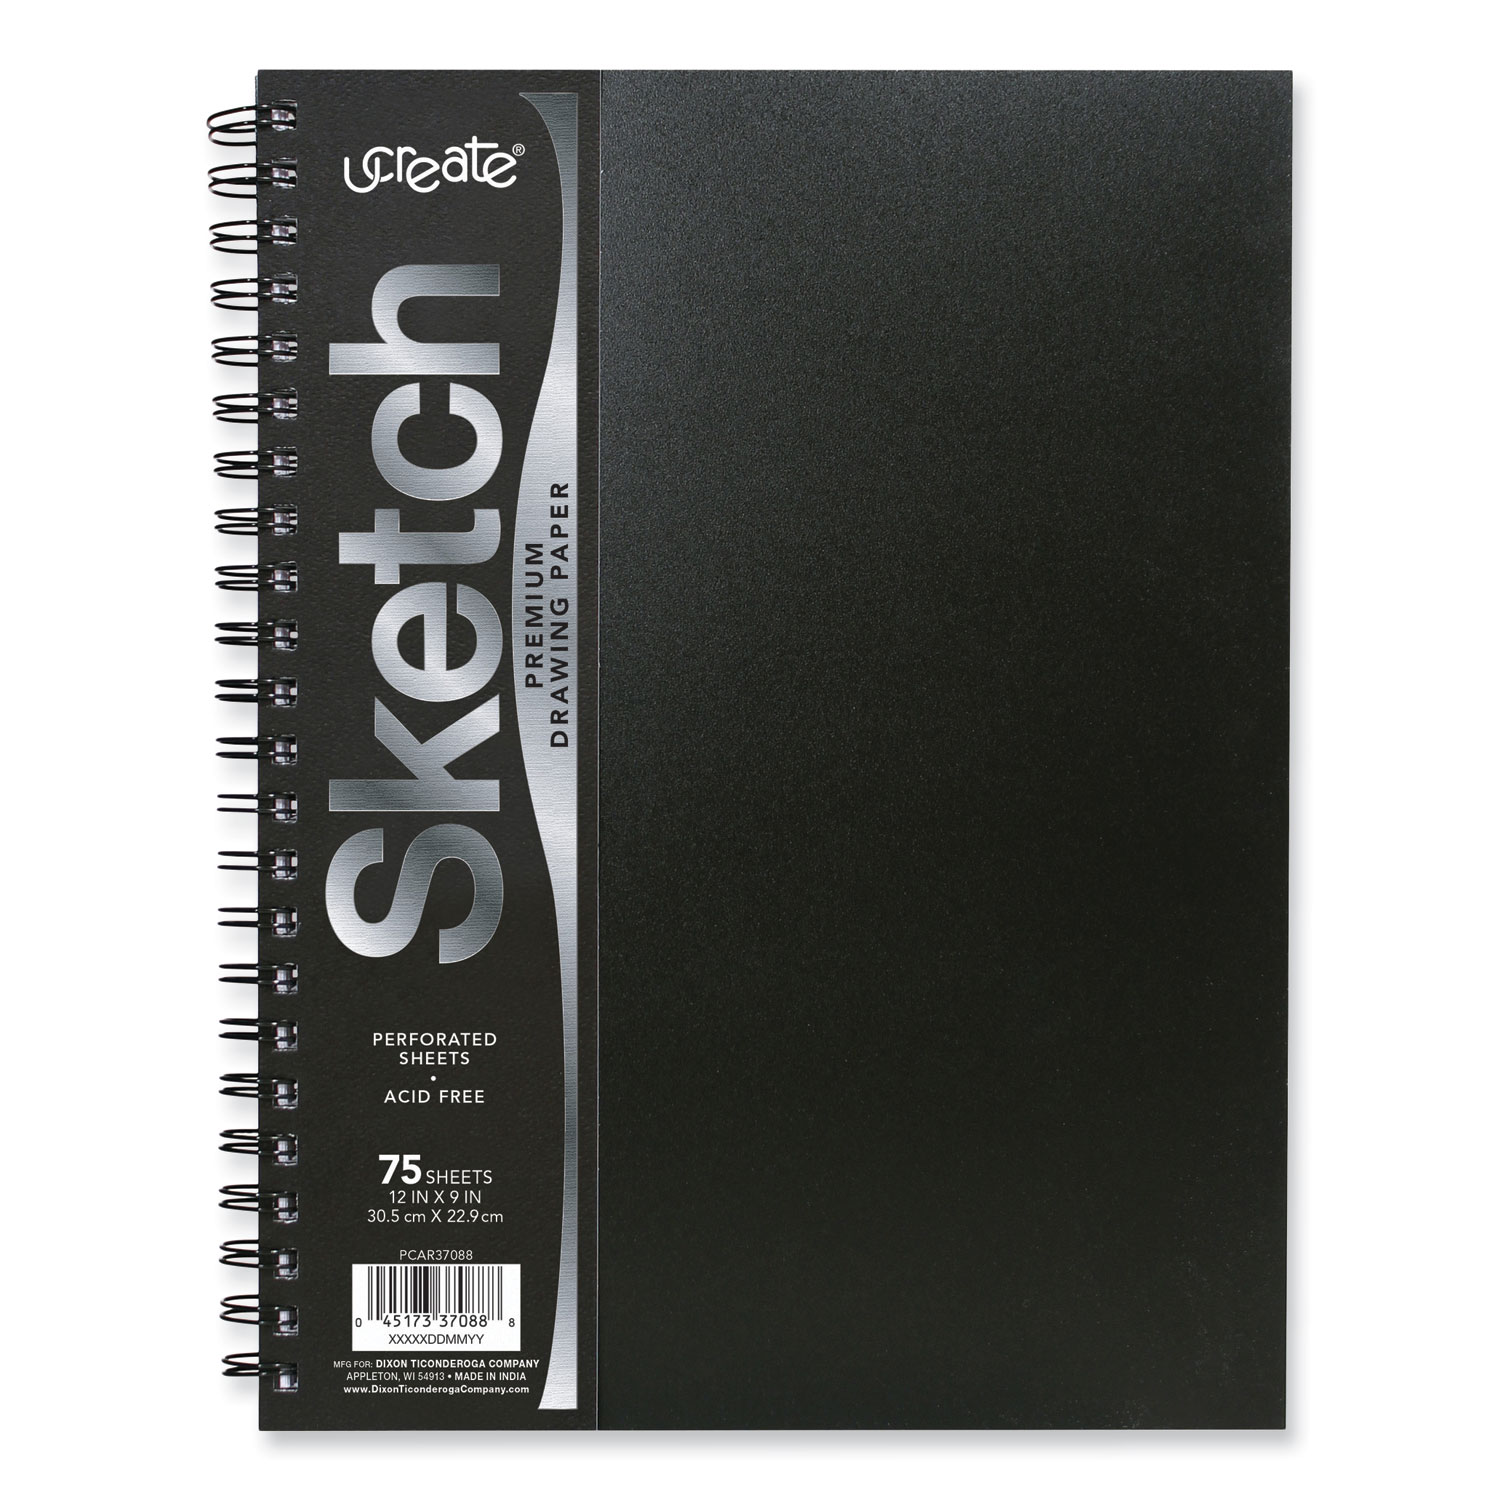 4-Pack Black Desk Dividers for Students, Plastic Study Carrel, Classroom  Folder